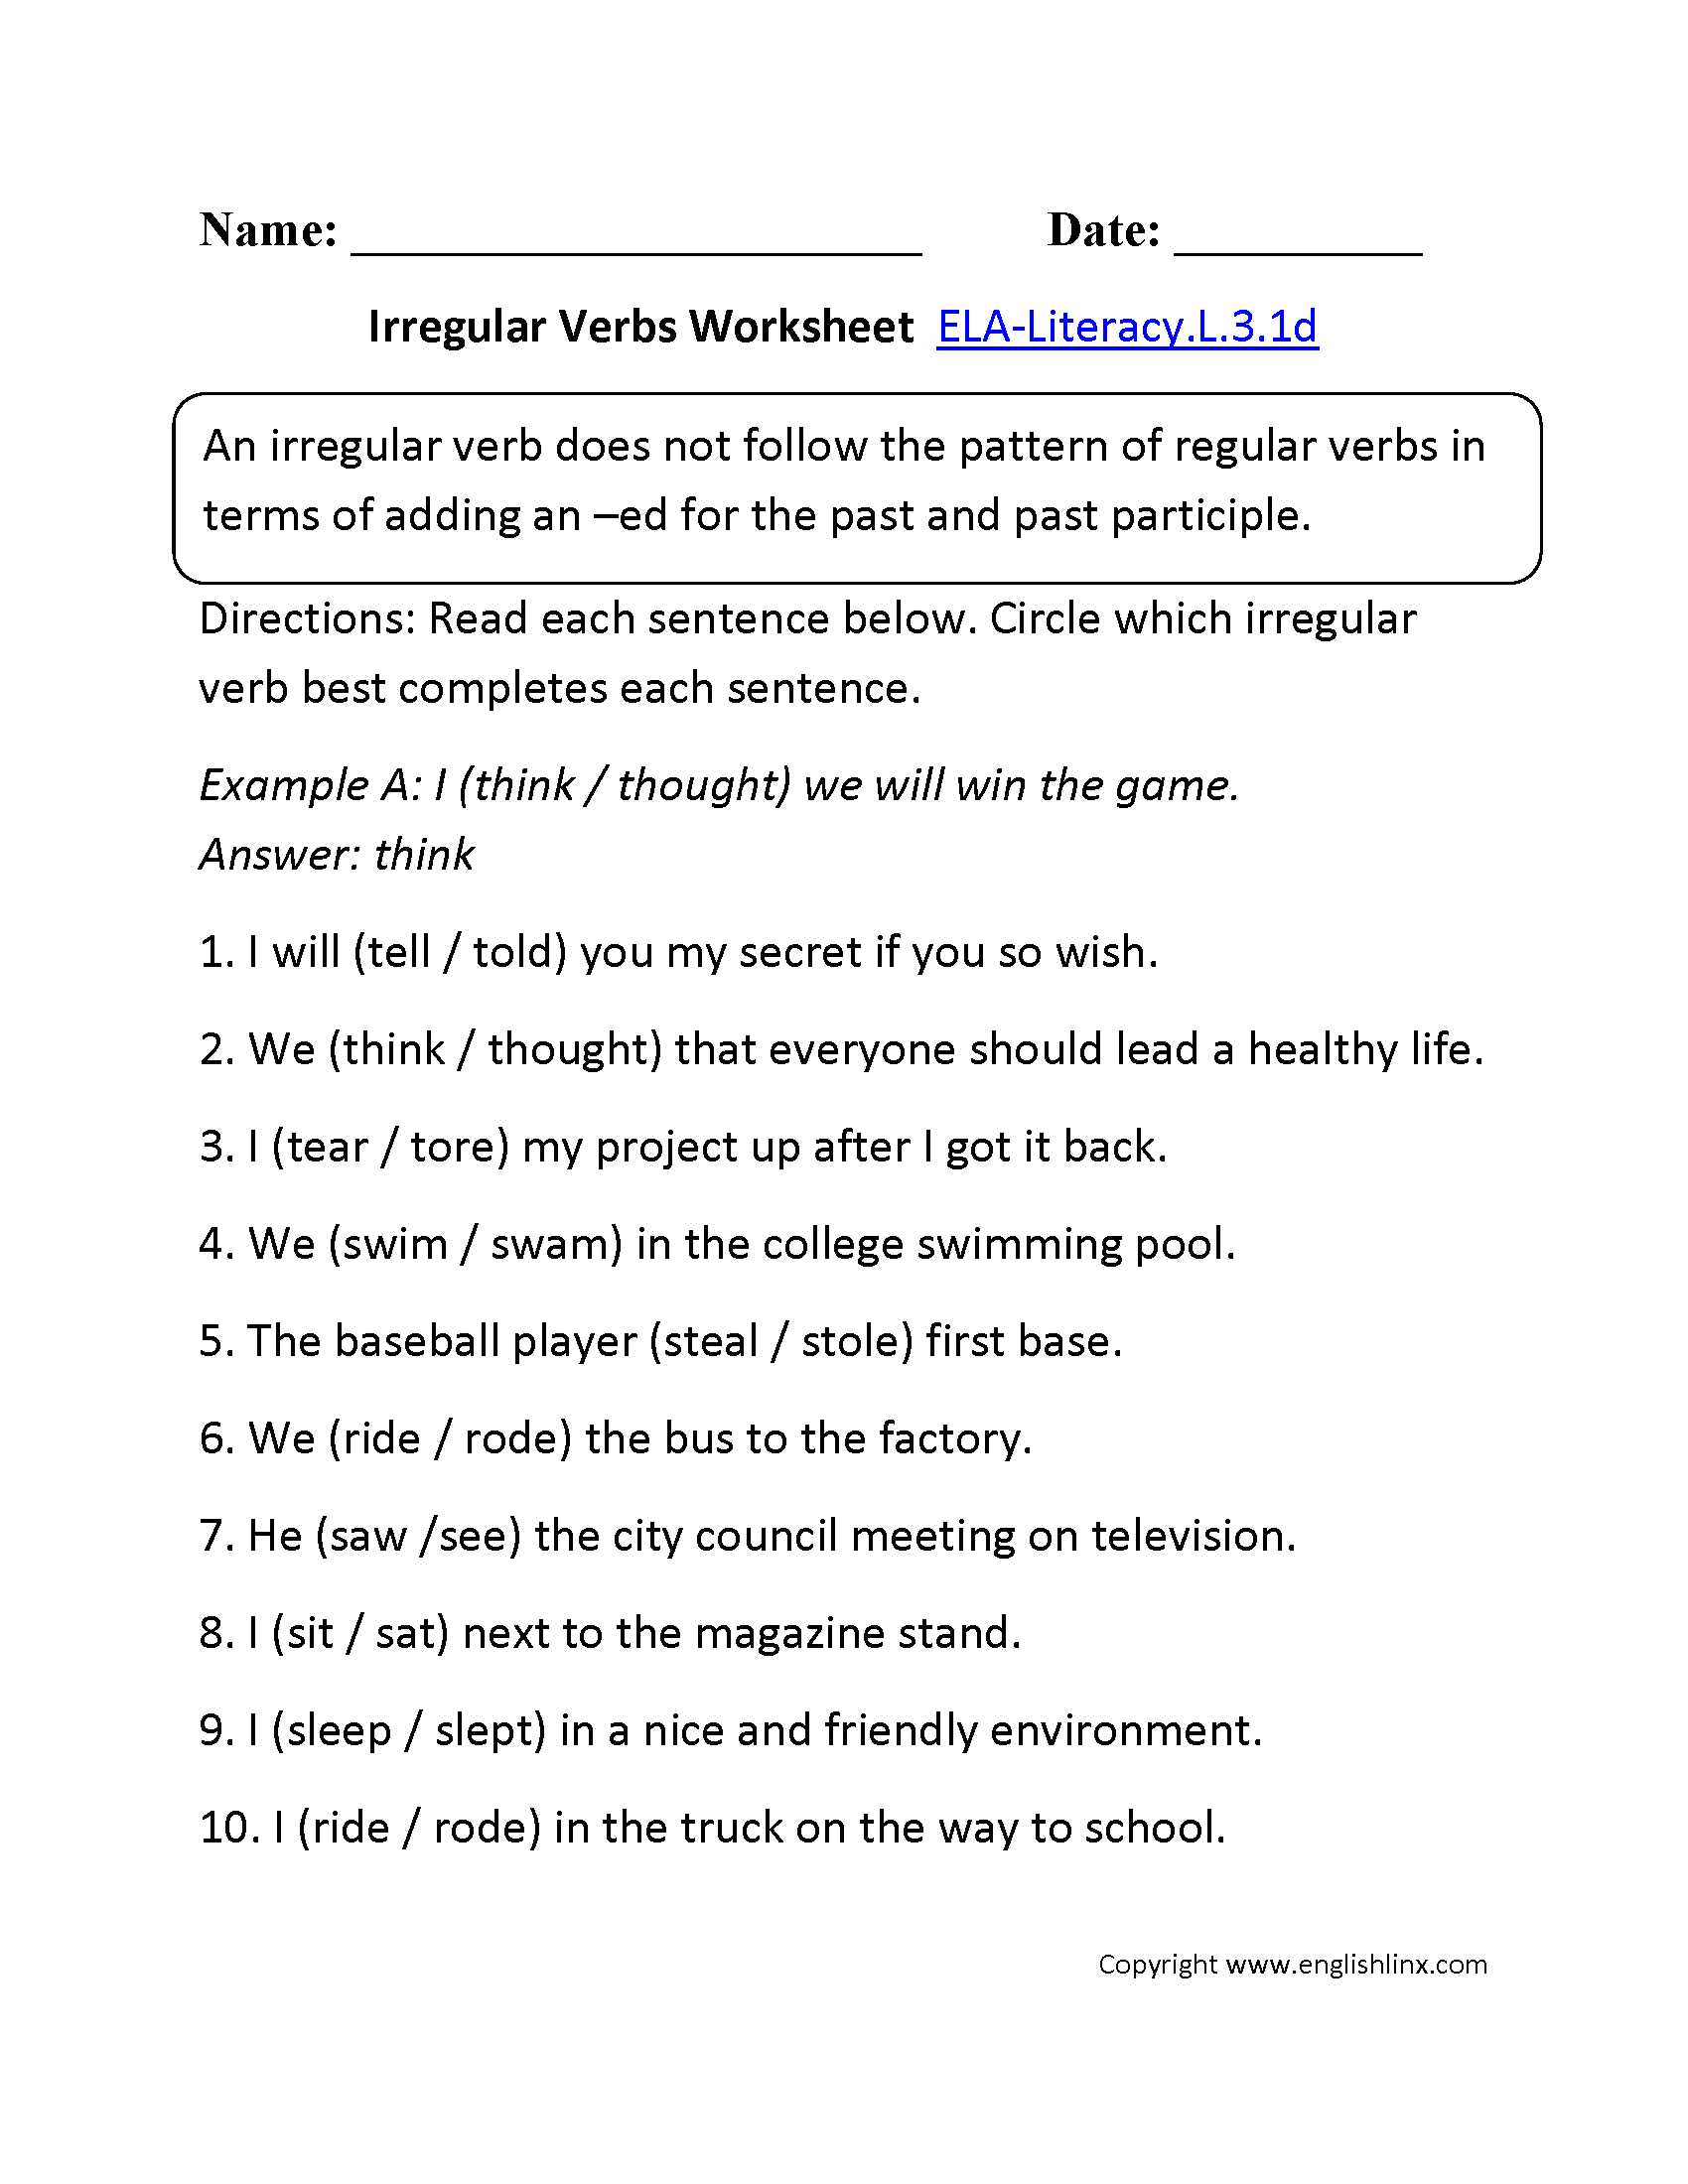 Regular Irregular Verbs Worksheet Also Irregular Verbs Worksheet 1 Ela Literacy L 3 1d Language Worksheet